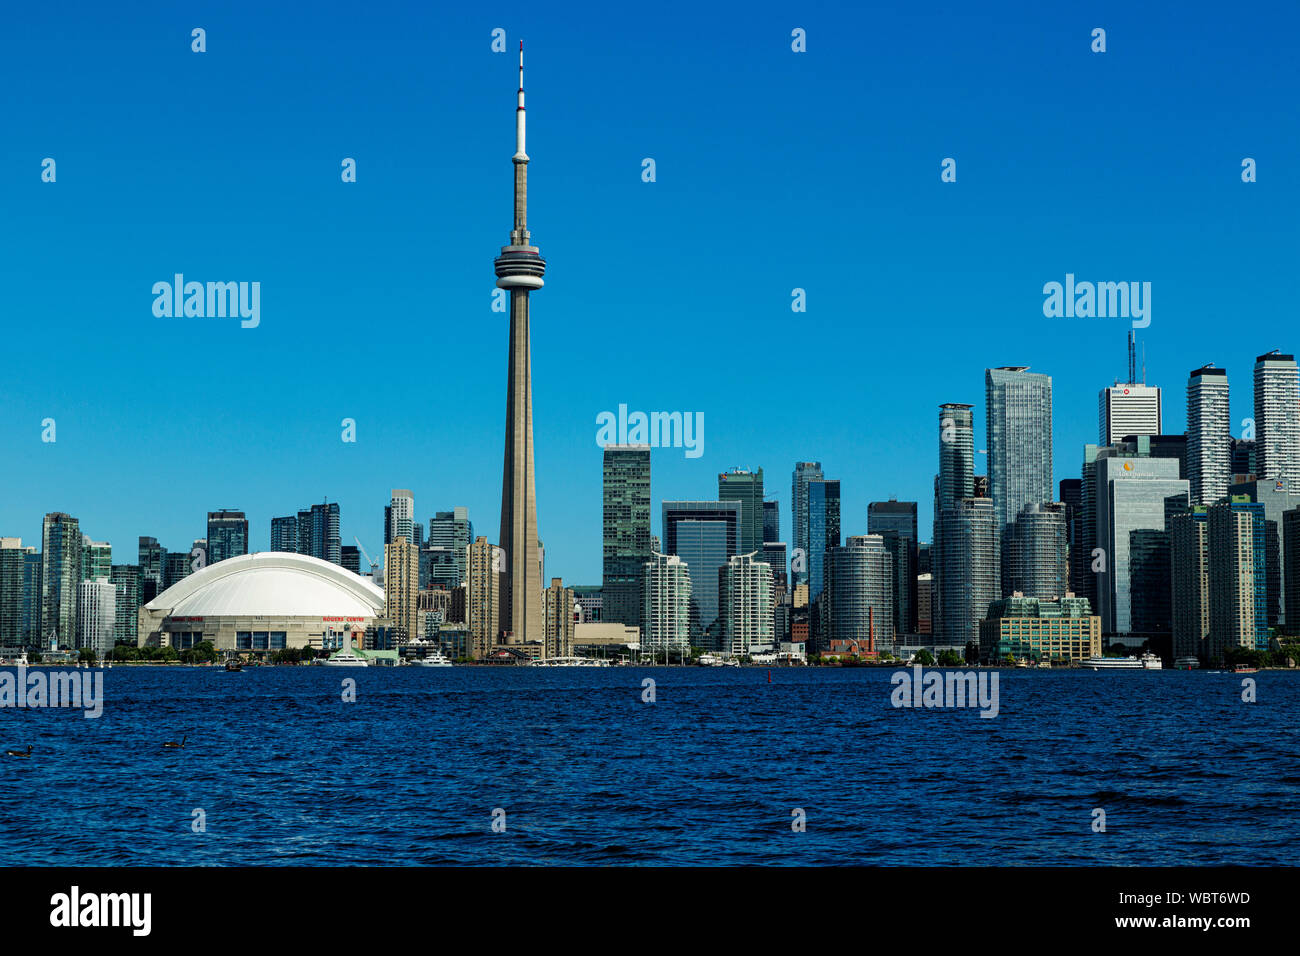 Toronto Ontario Canada 2019 vue depuis l'île de Toronto. Banque D'Images